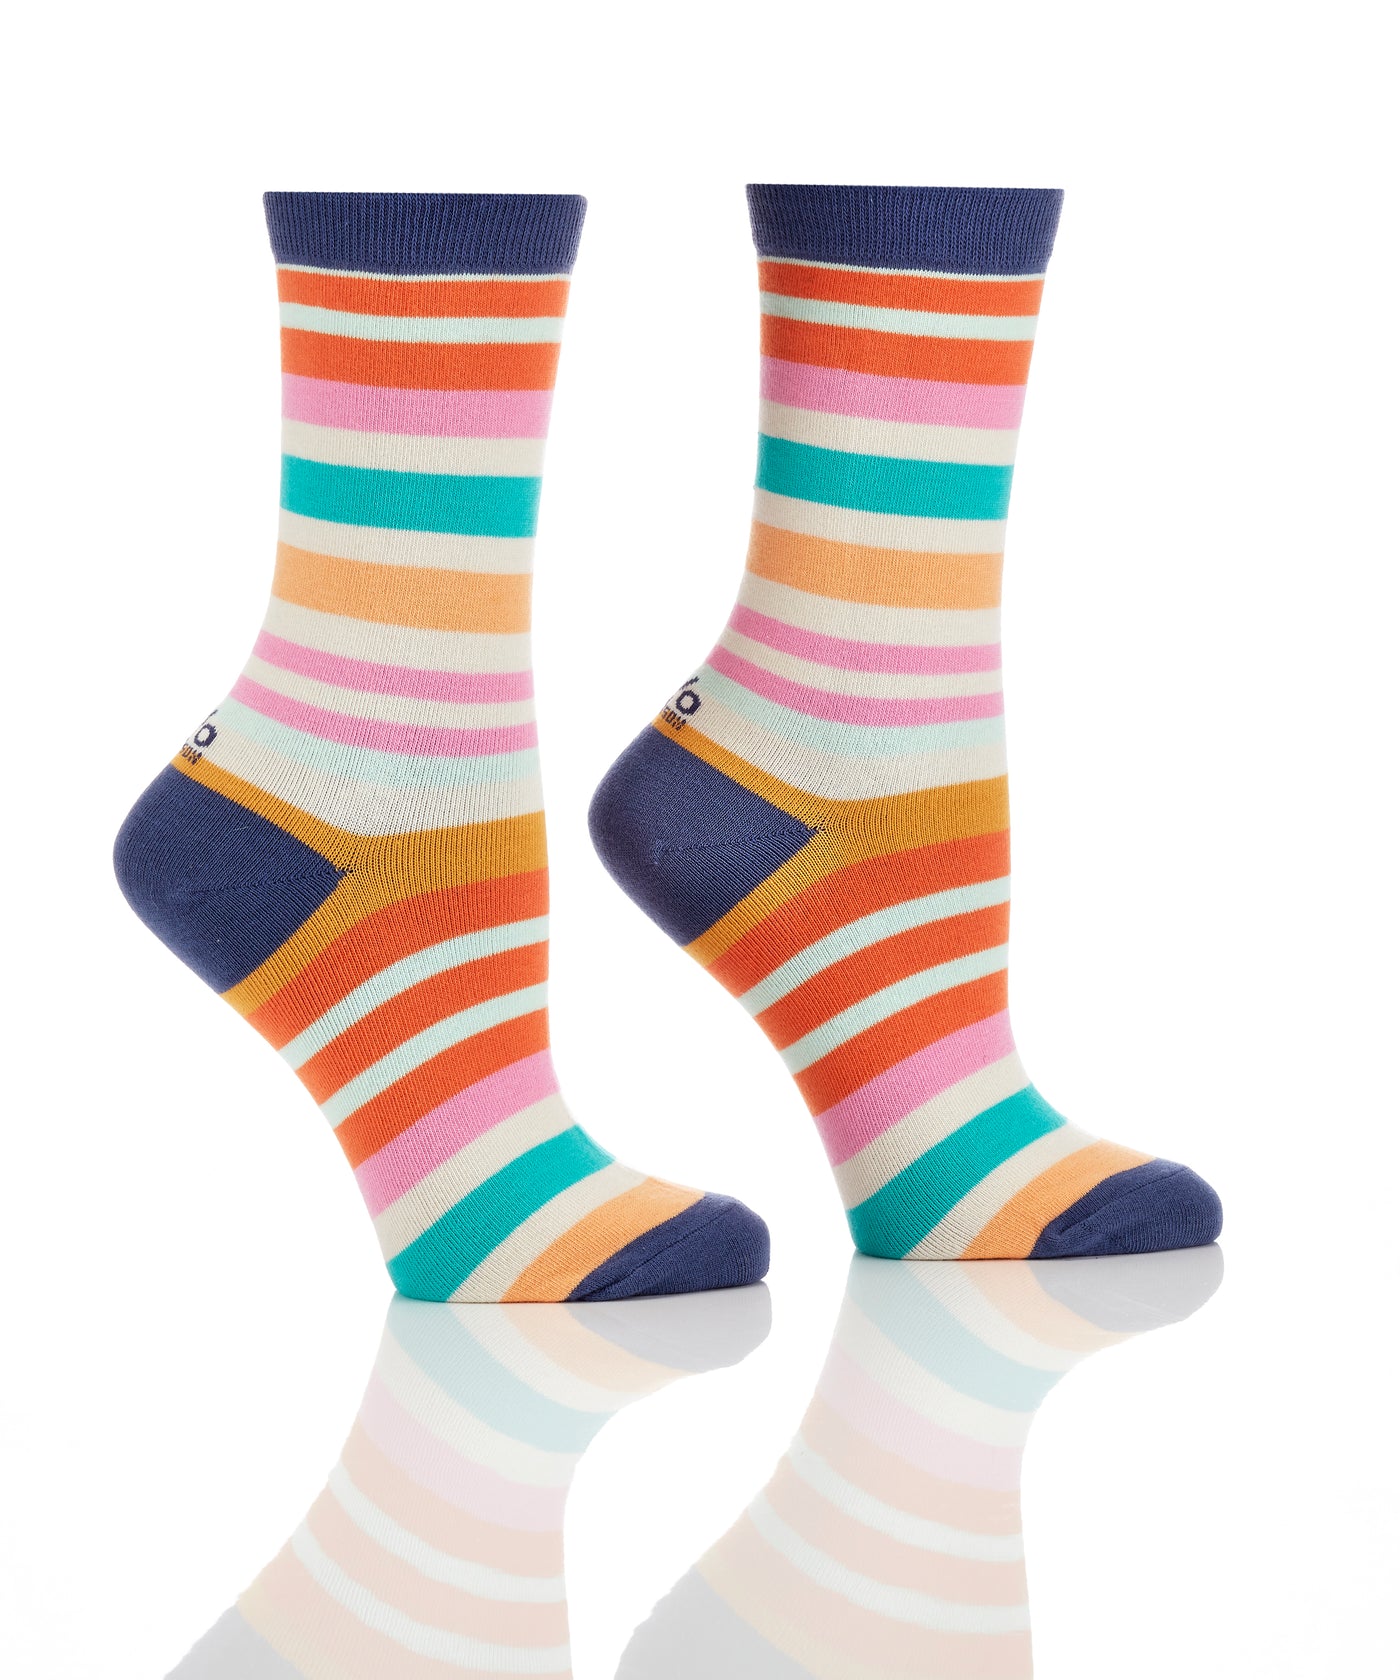 "Stripes 2" Cotton Dress Crew Socks by YO Sox -Medium